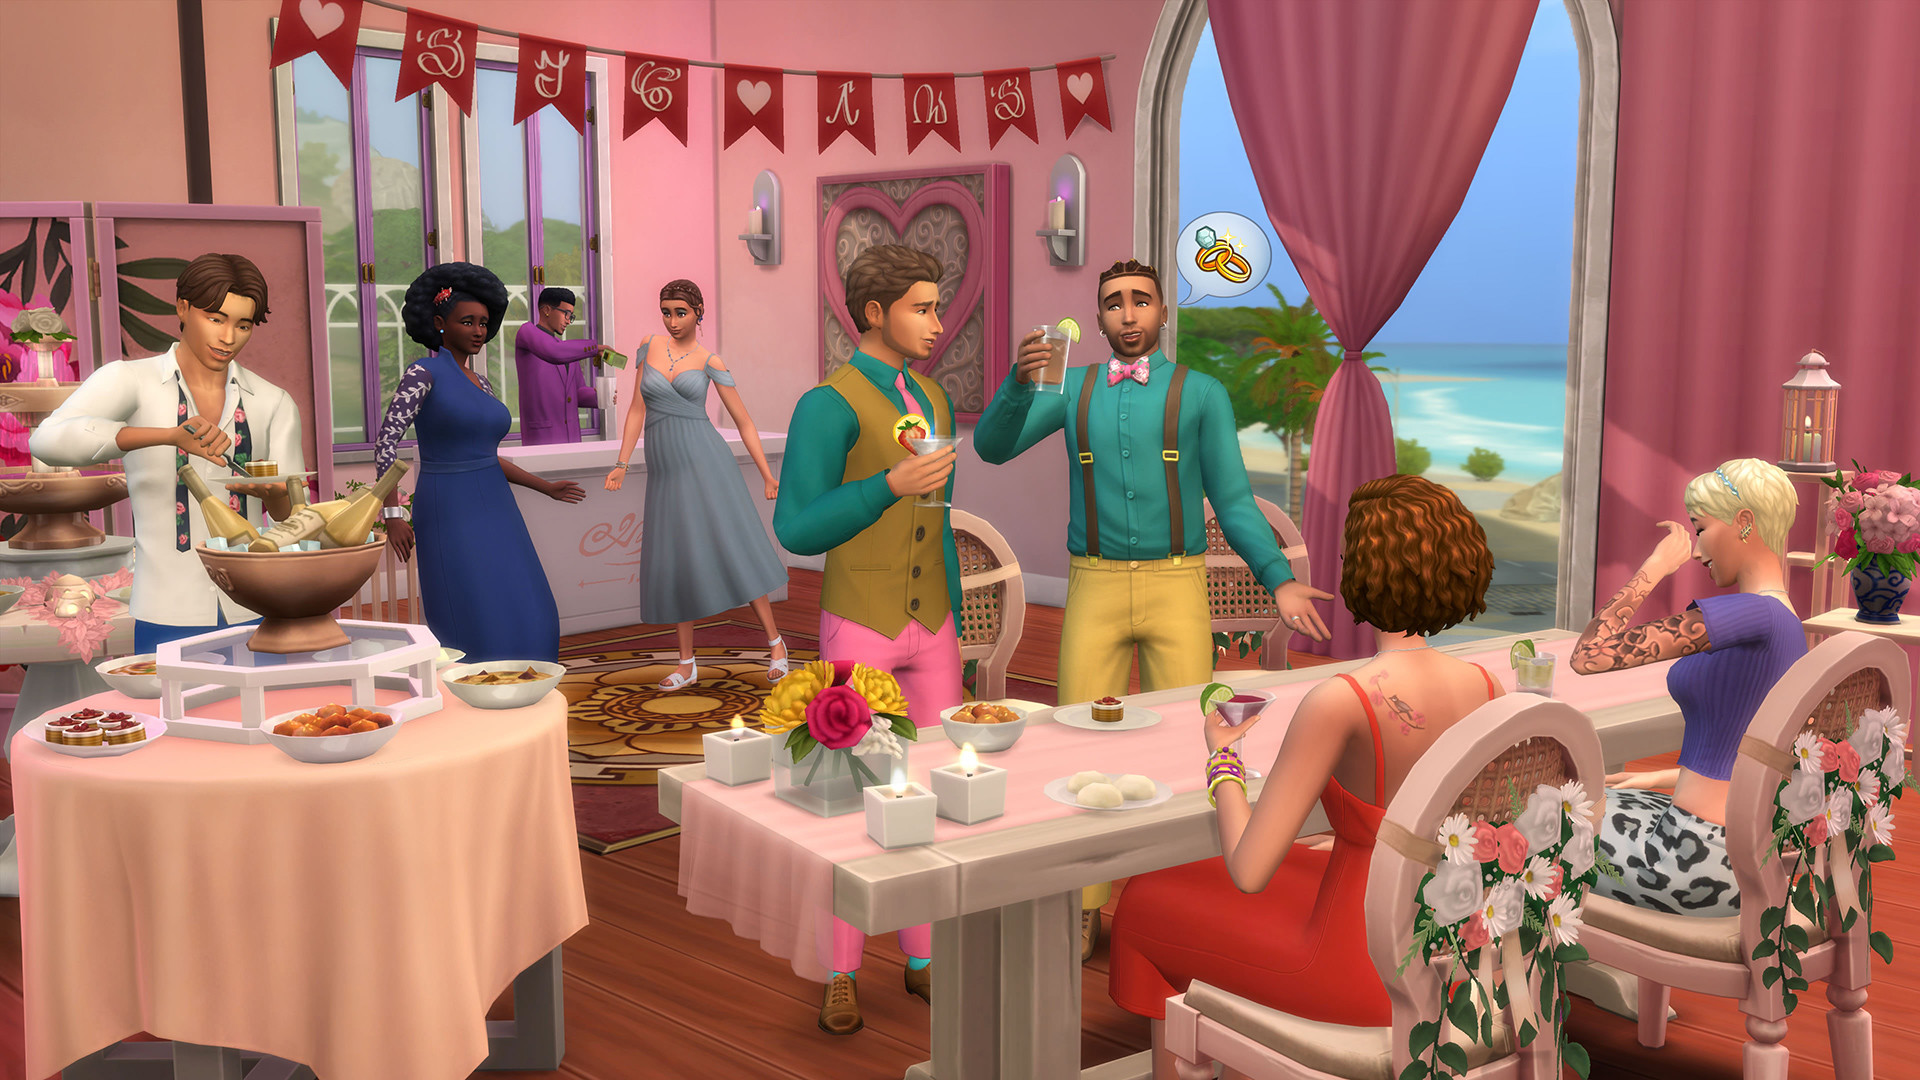 The Sims 4 - My Wedding Stories Game Pack DLC Origin CD Key 18.07 $